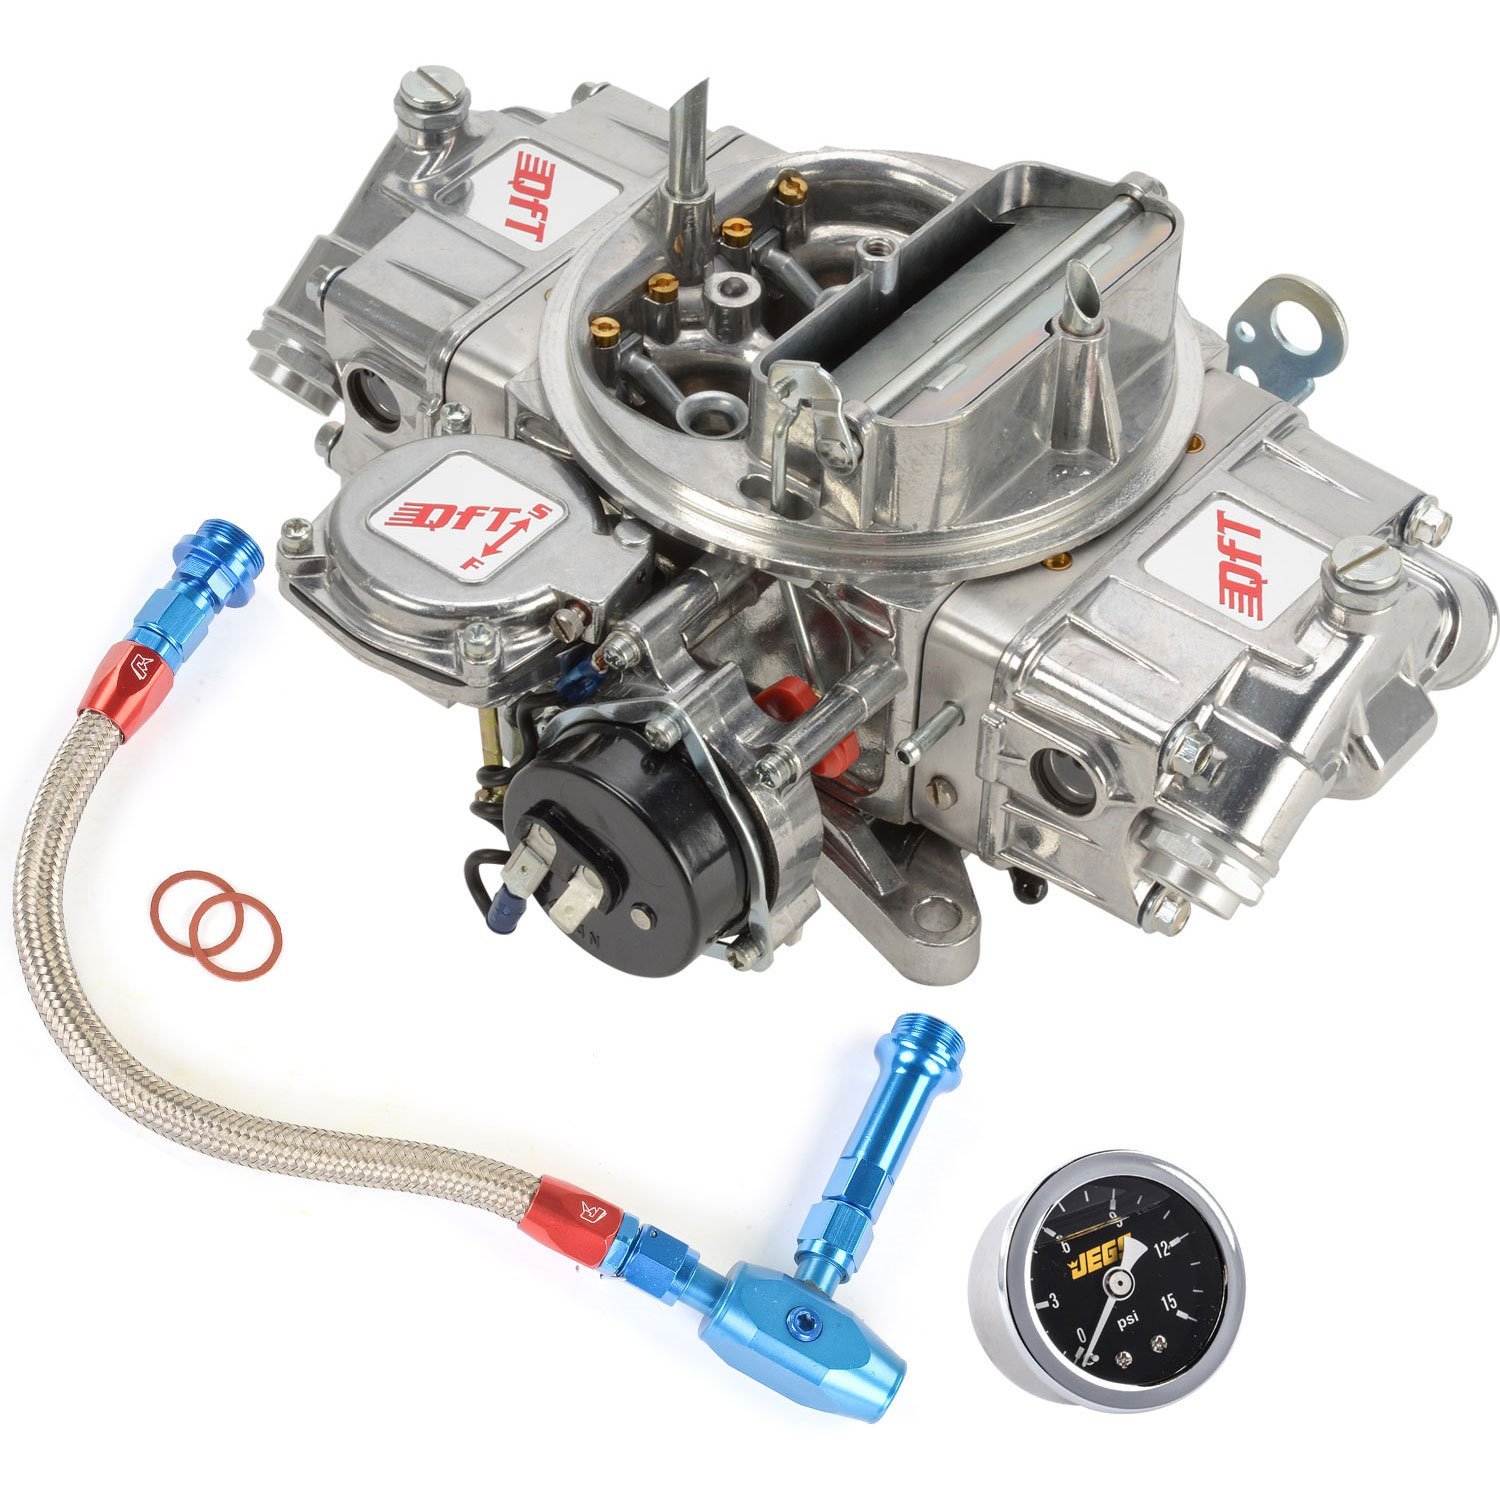 Hot Rod Carburetor Kit Includes: 735 cfm Carburetor with Vacuum Secondaries